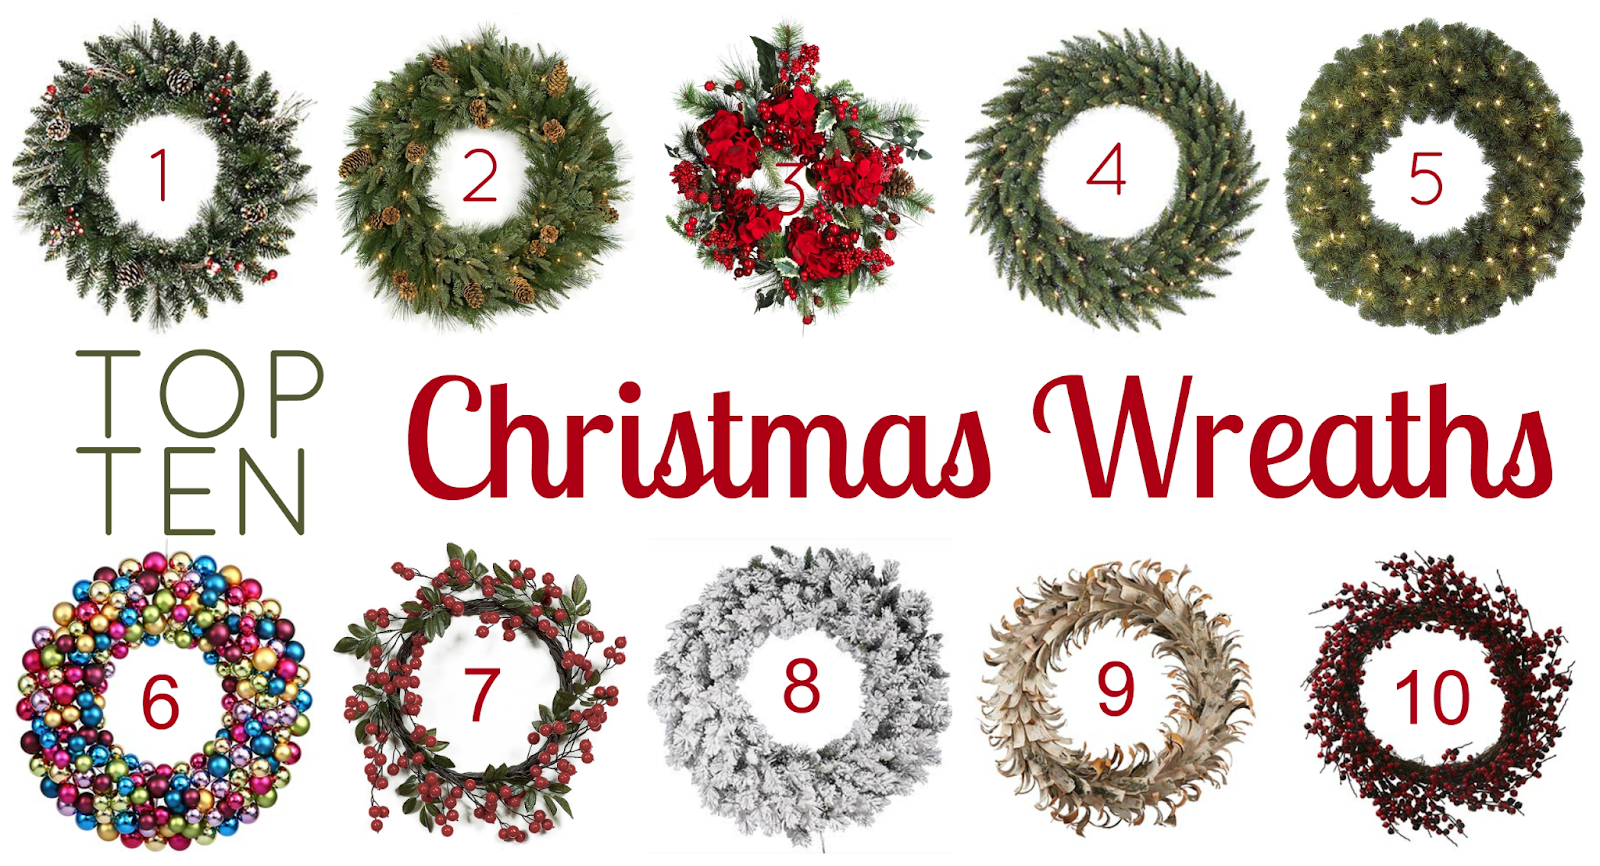 Top 10 Christmas Wreaths